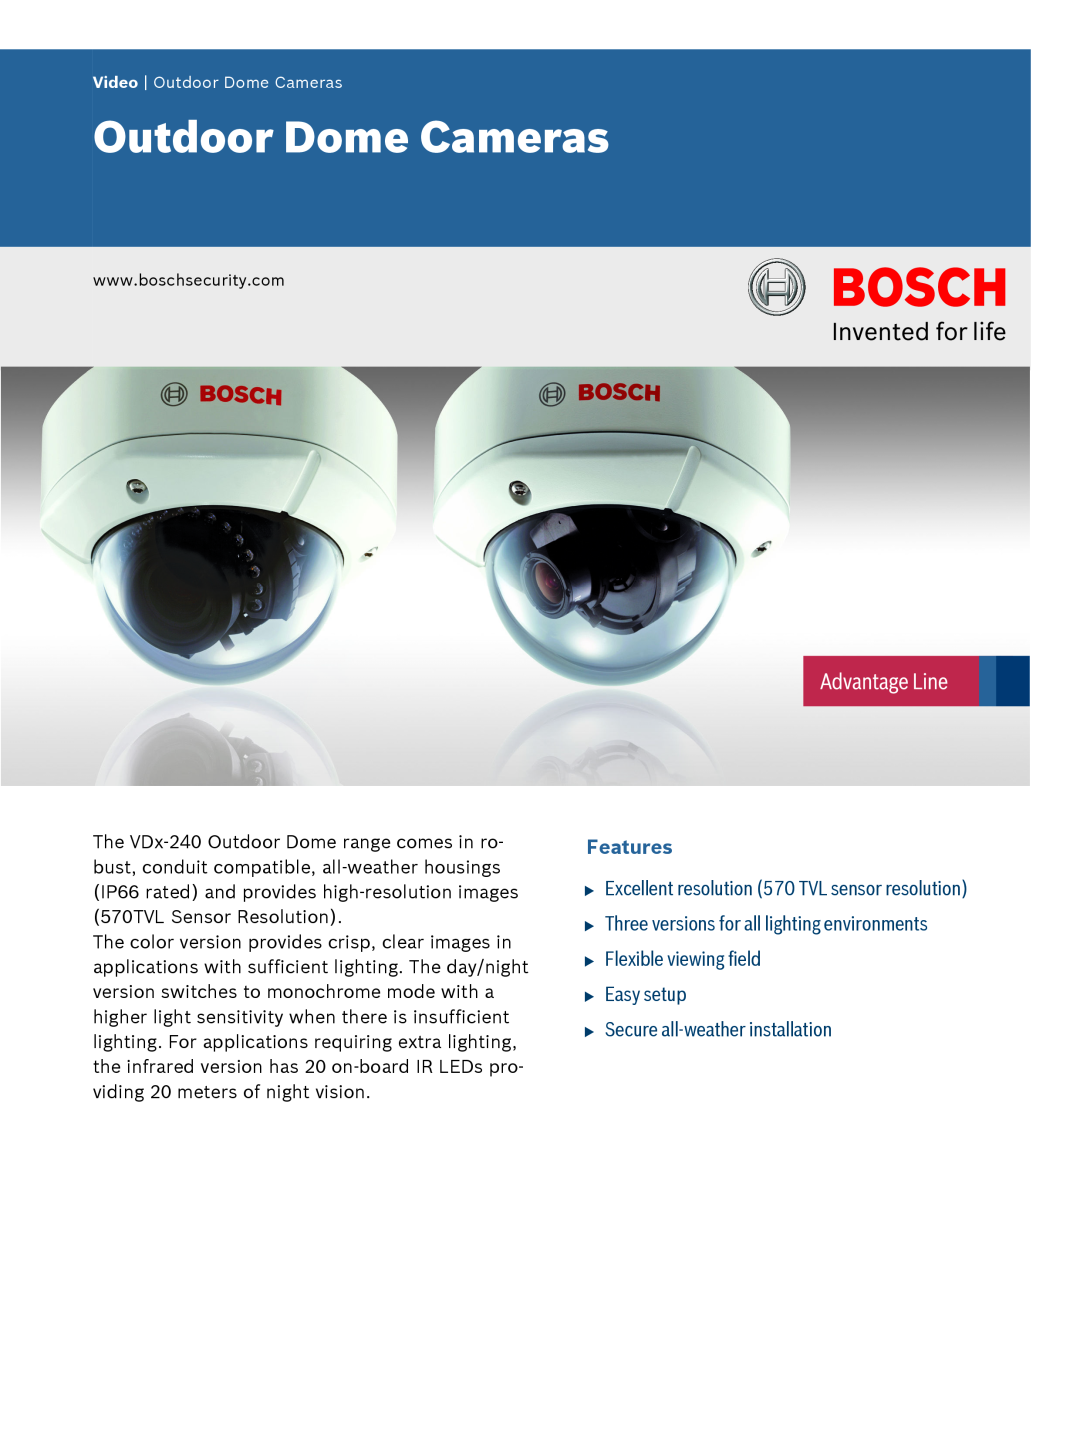 Bosch Appliances VDx-240 manual Outdoor Dome Cameras, Features, uExcellent resolution 570 TVL sensor resolution 